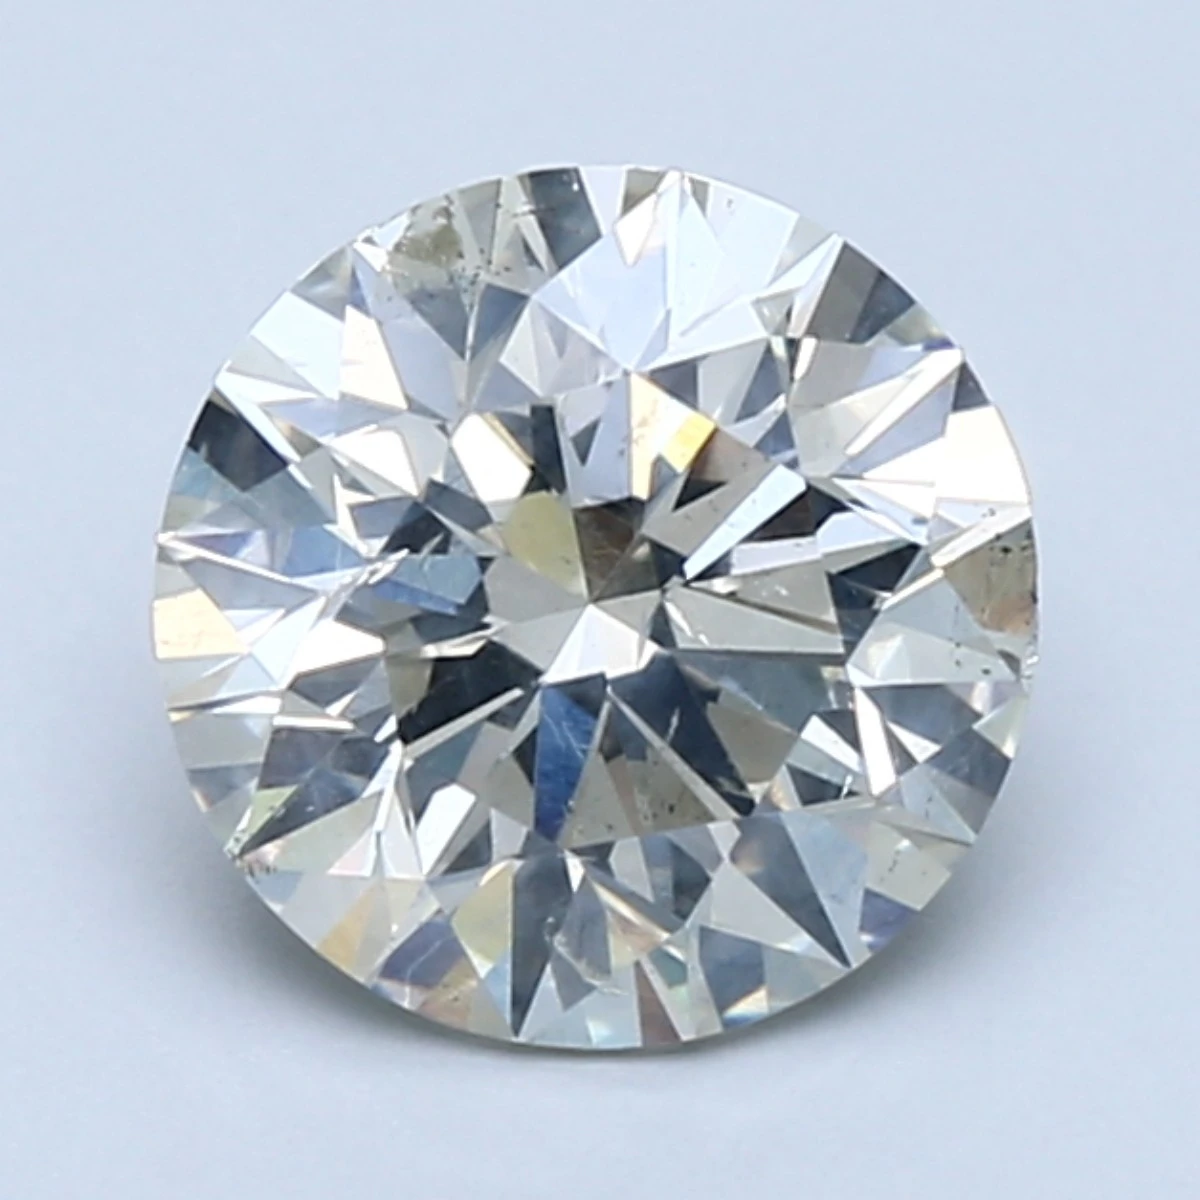 2 carat K color diamond with SI2 clarity